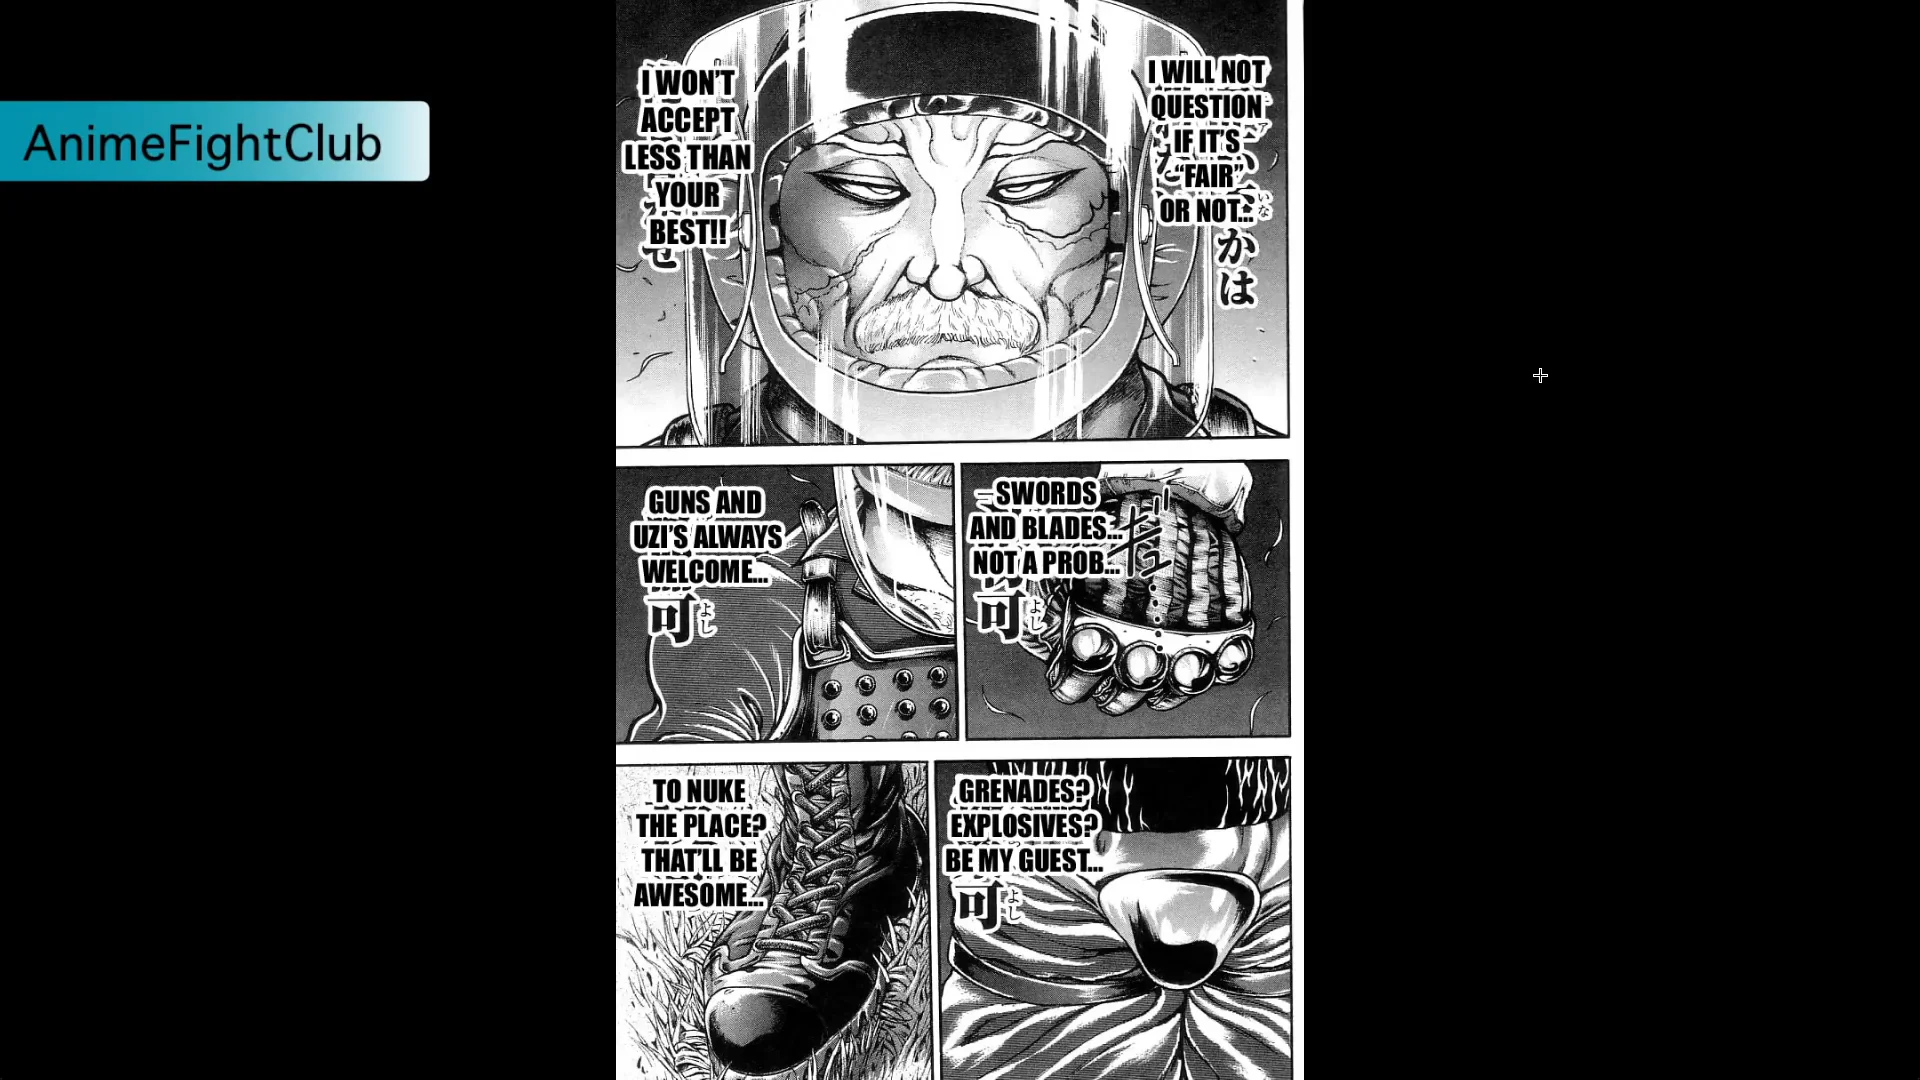 Incredible Yujiro vs Baki art from the manga son of ogre by